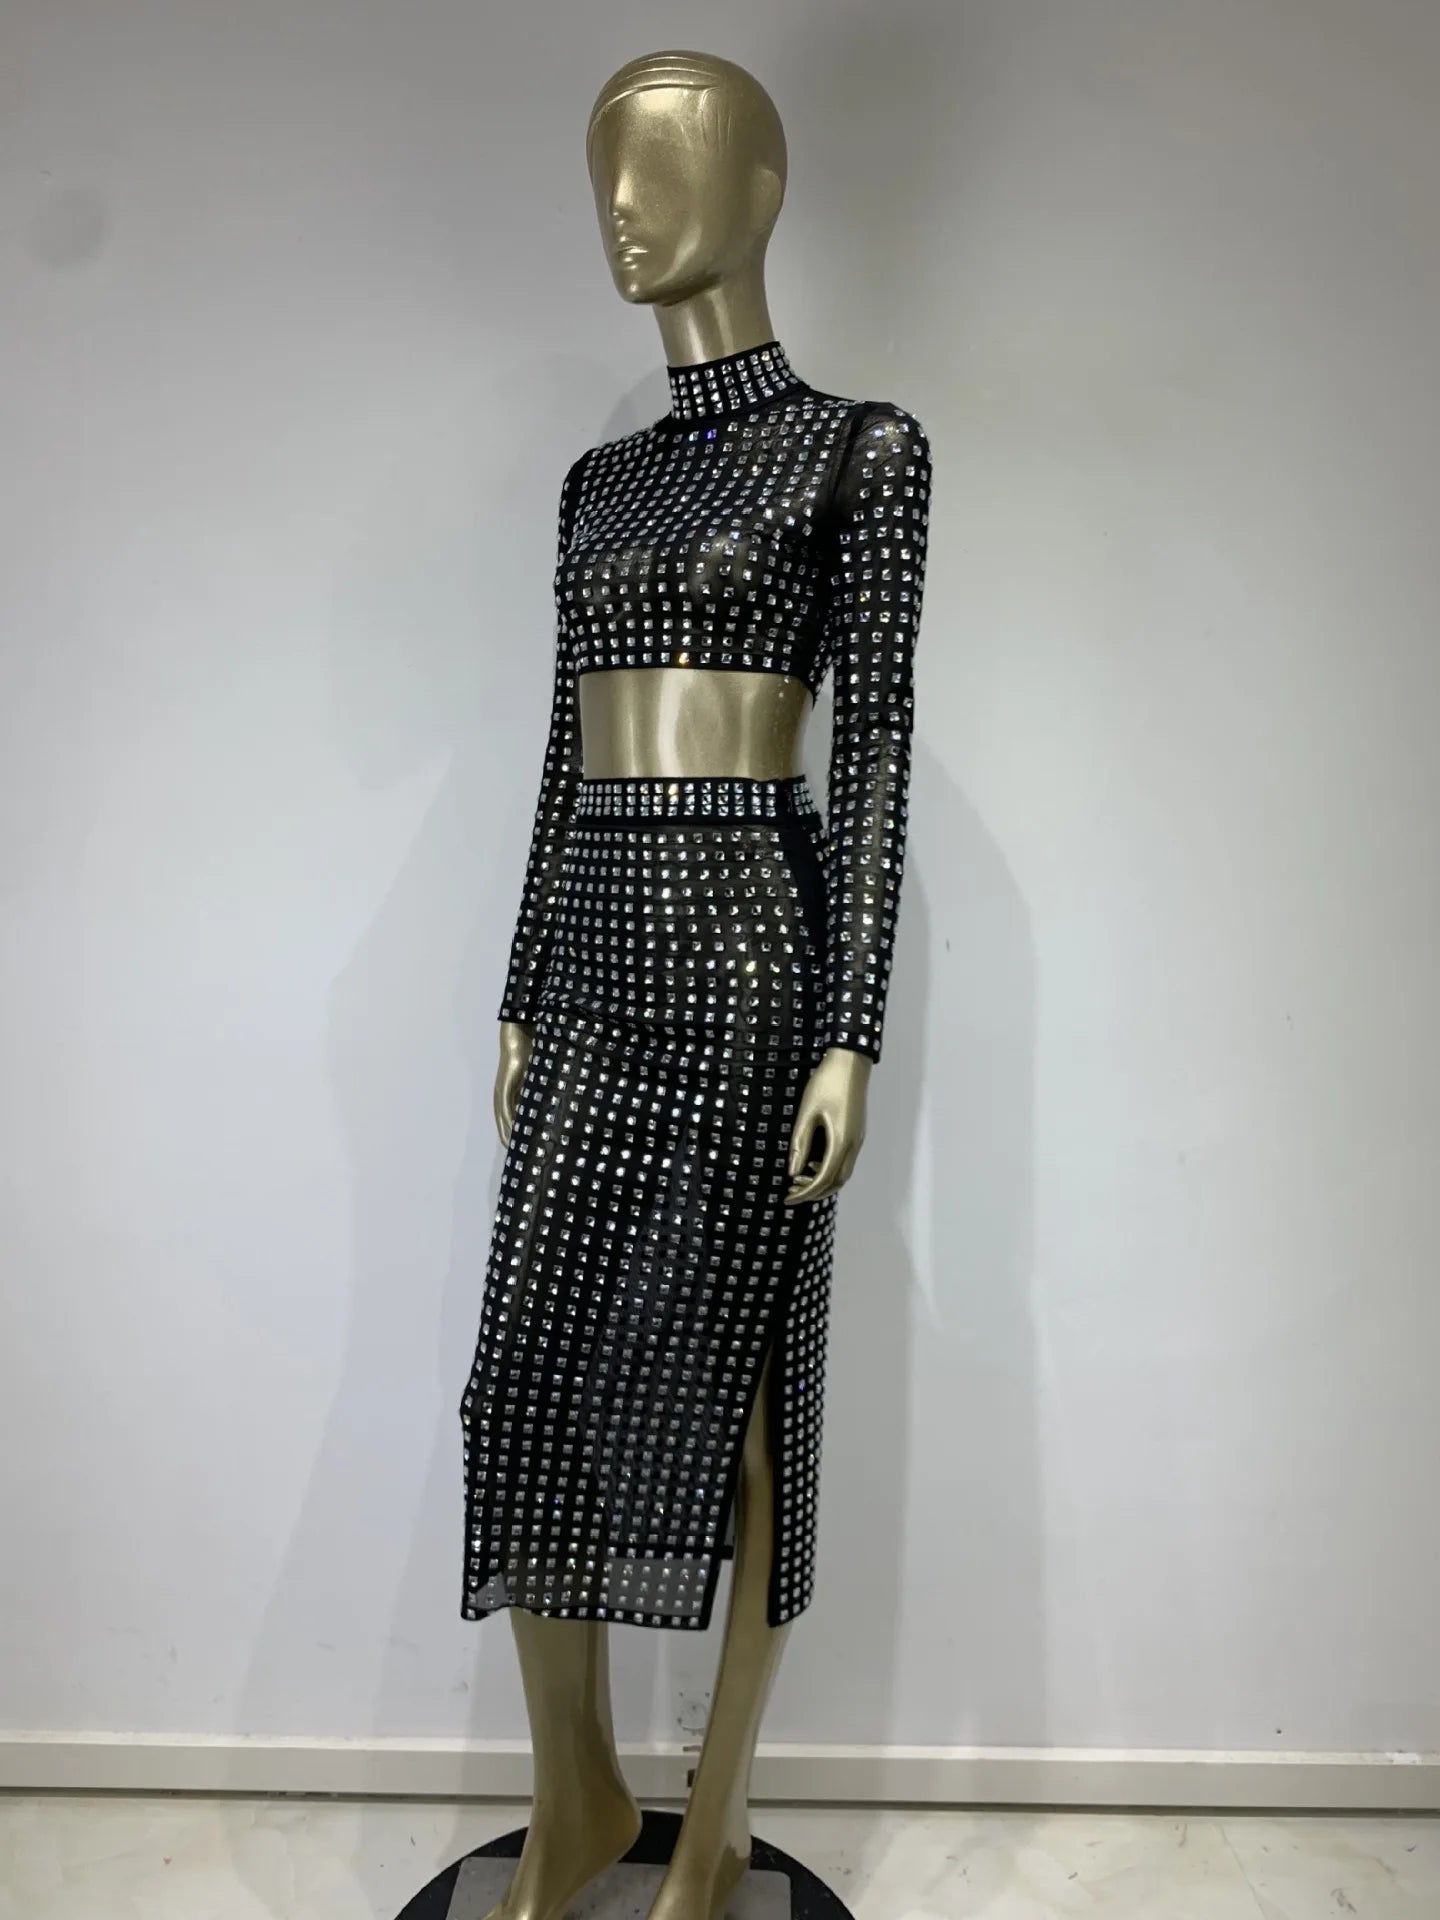 Hot Girl Women's Fashion Rivet Elastic Tight Skirt Suit aclosy